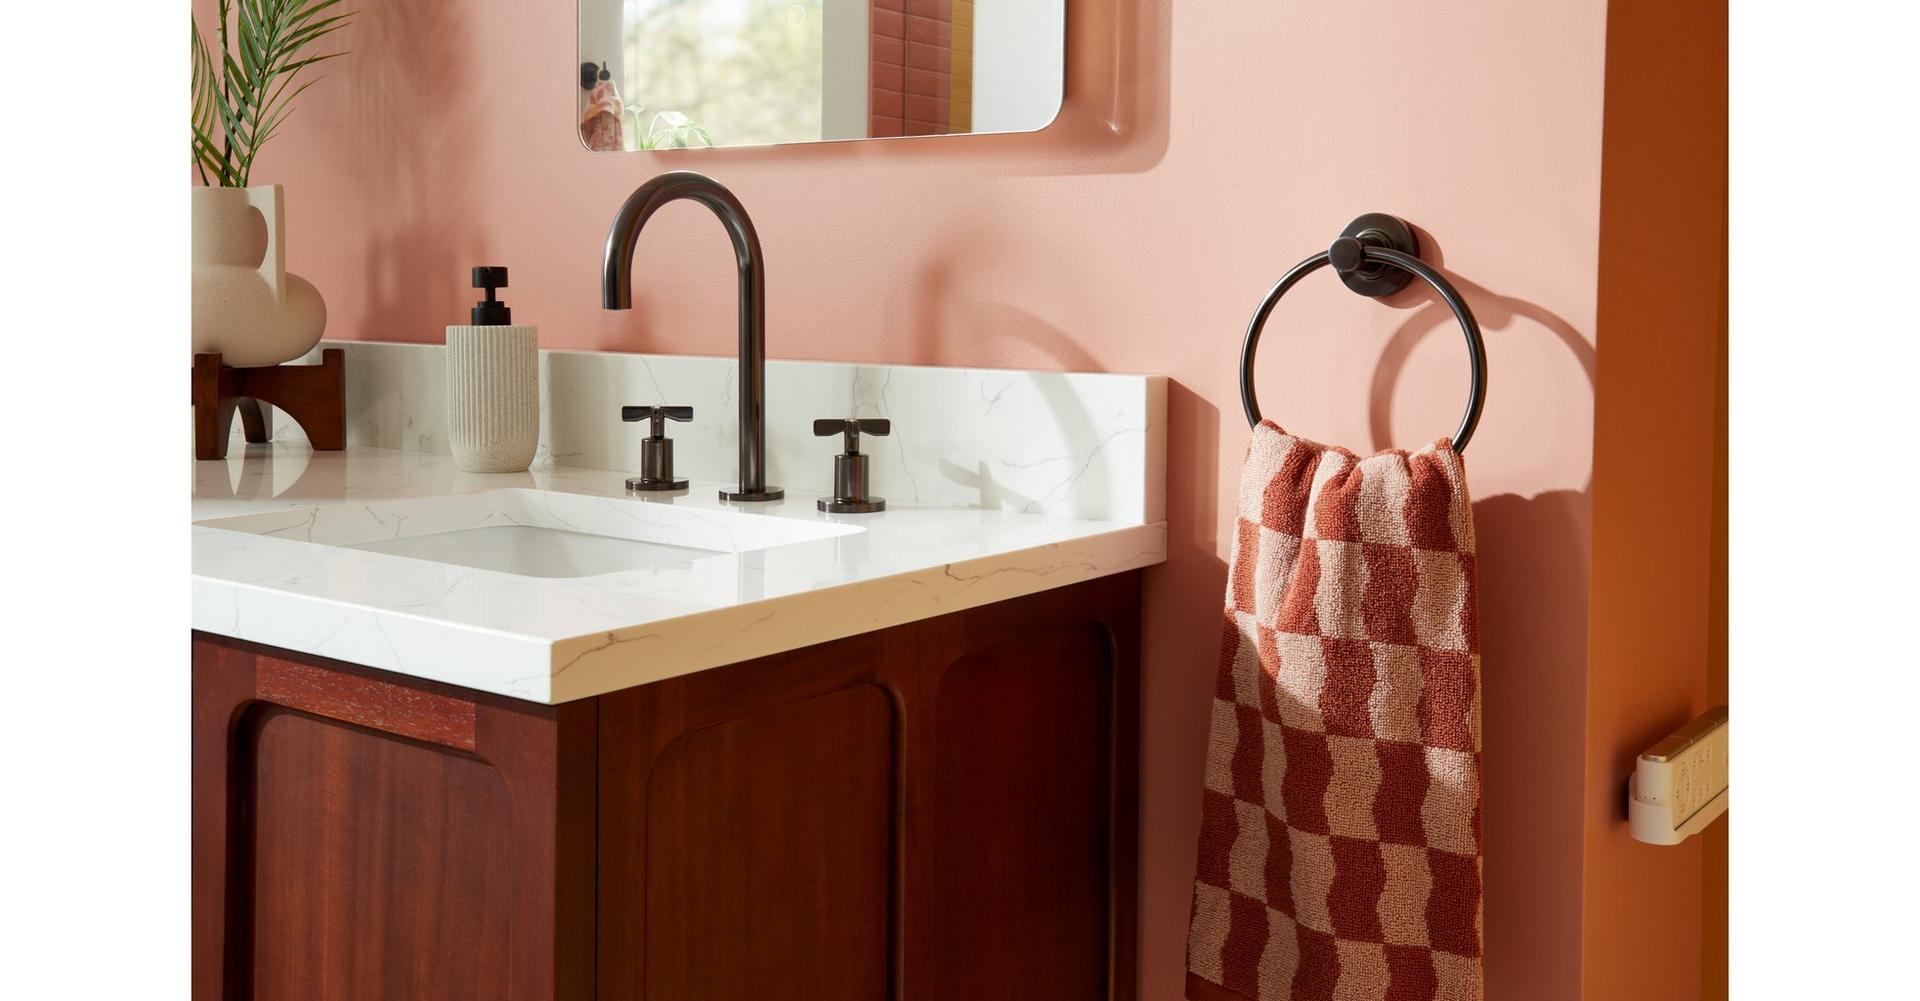 Vassor Widespread Bathroom Faucet & Lexia Towel Ring in Gunmetal for installing bathroom hardware